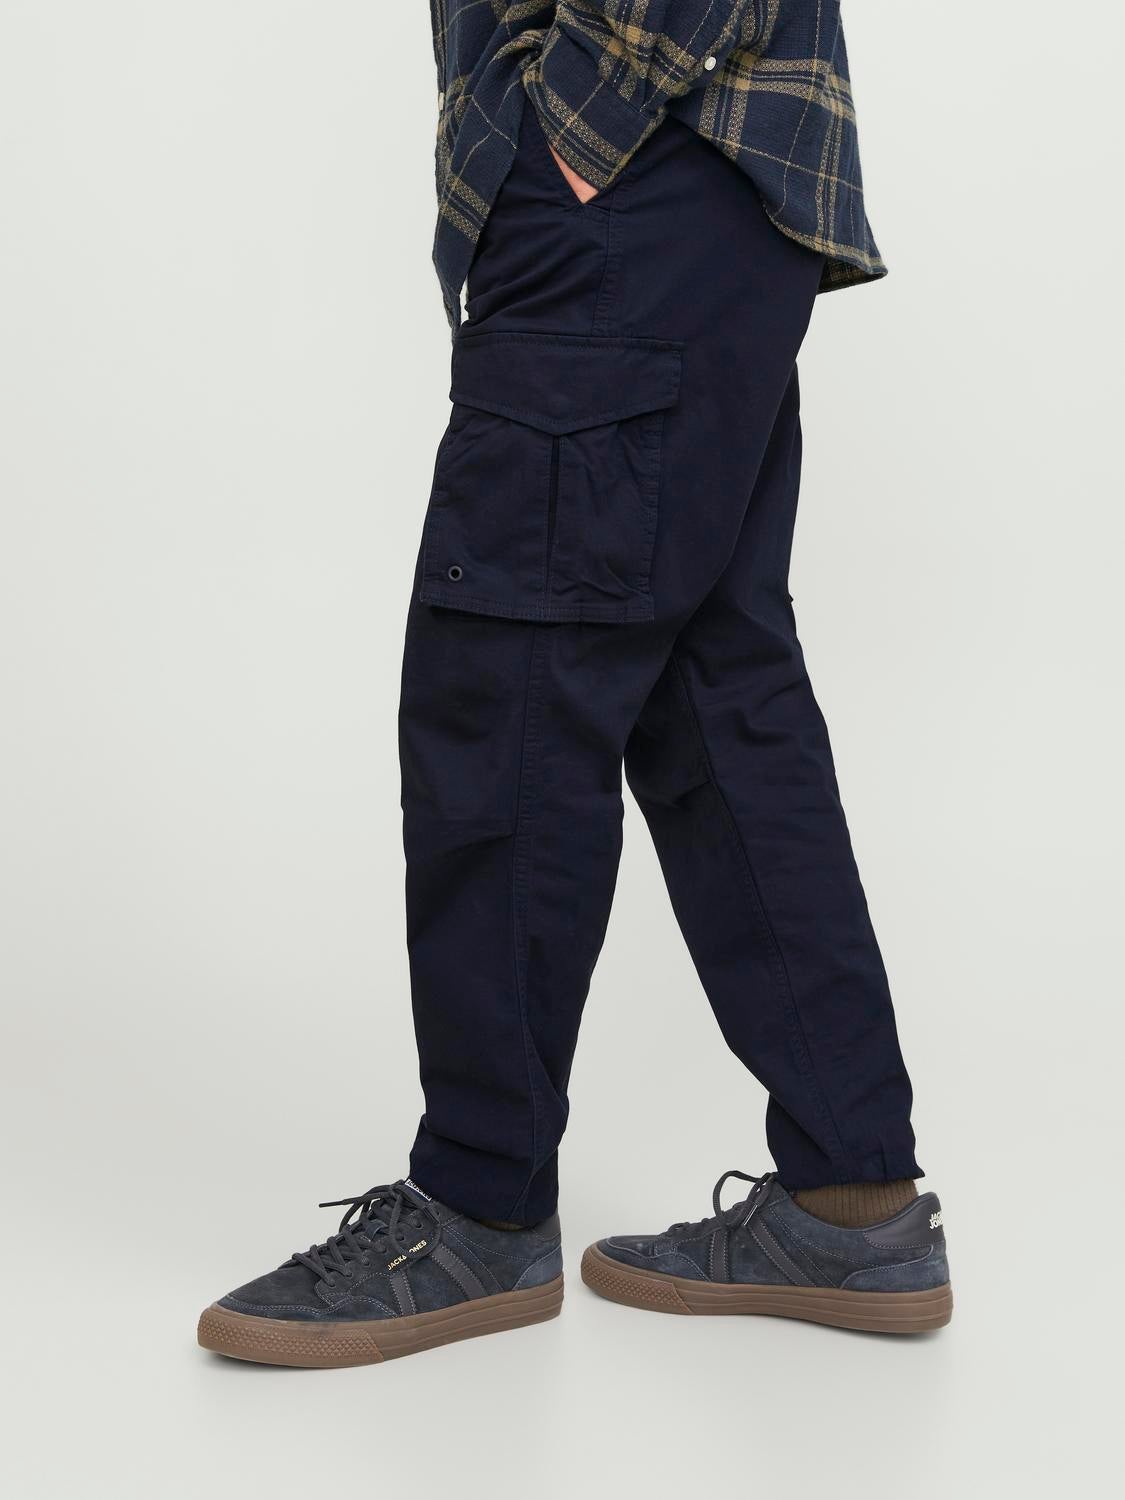 Jack Jones cargo pants vintage size 32 | eBay